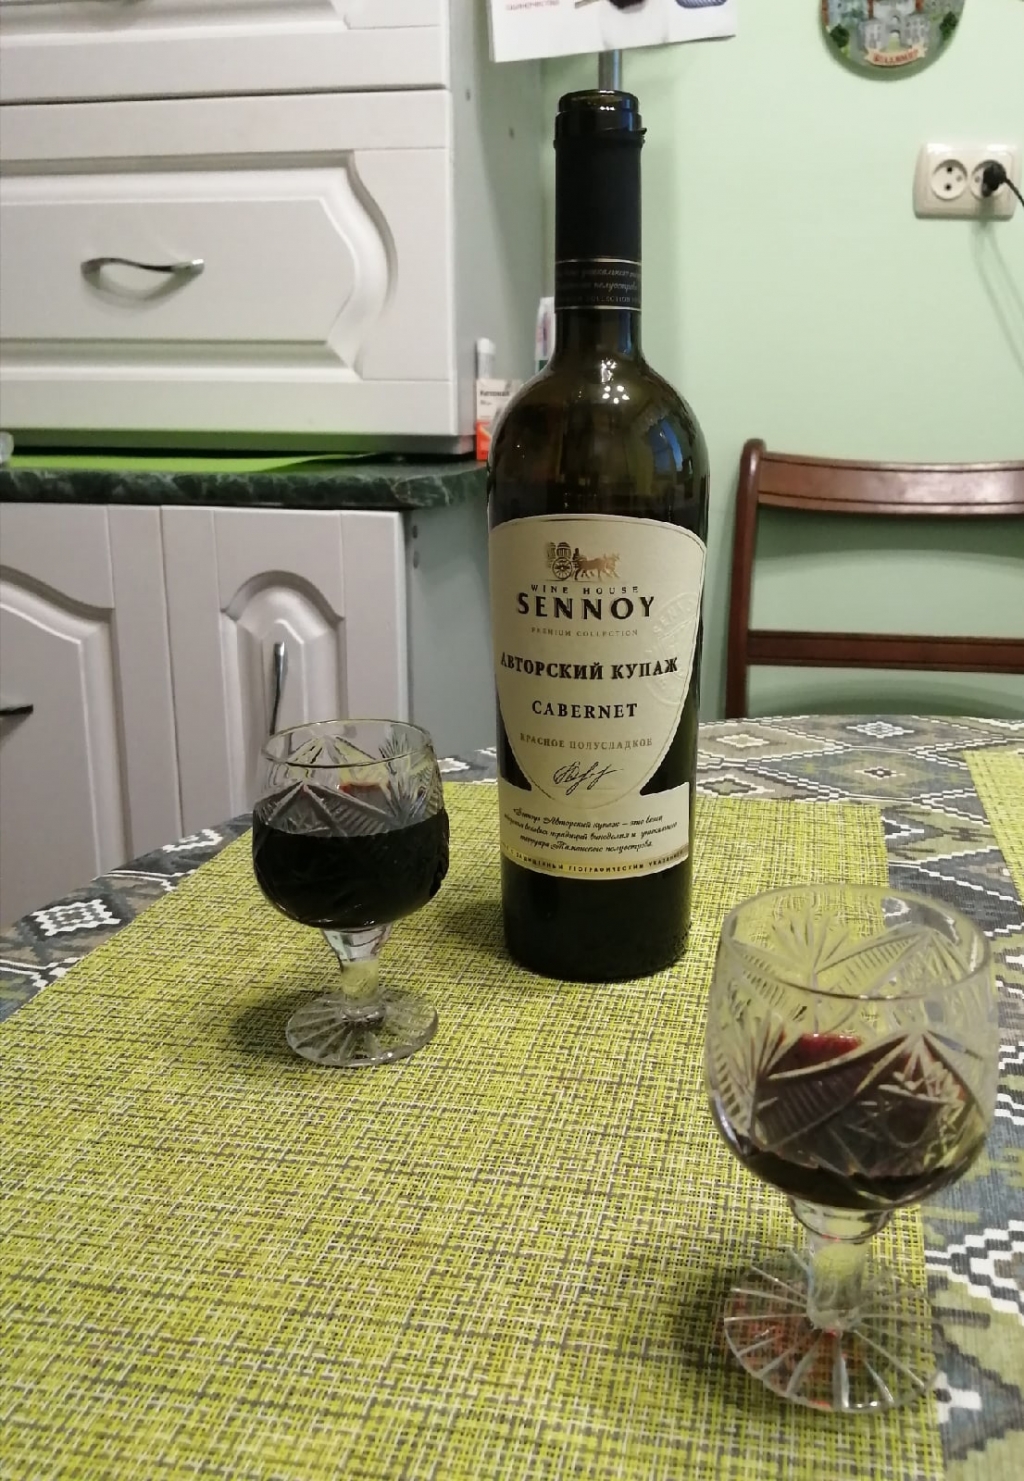 Wine House Sennoy - Авторский Купаж Cabernet